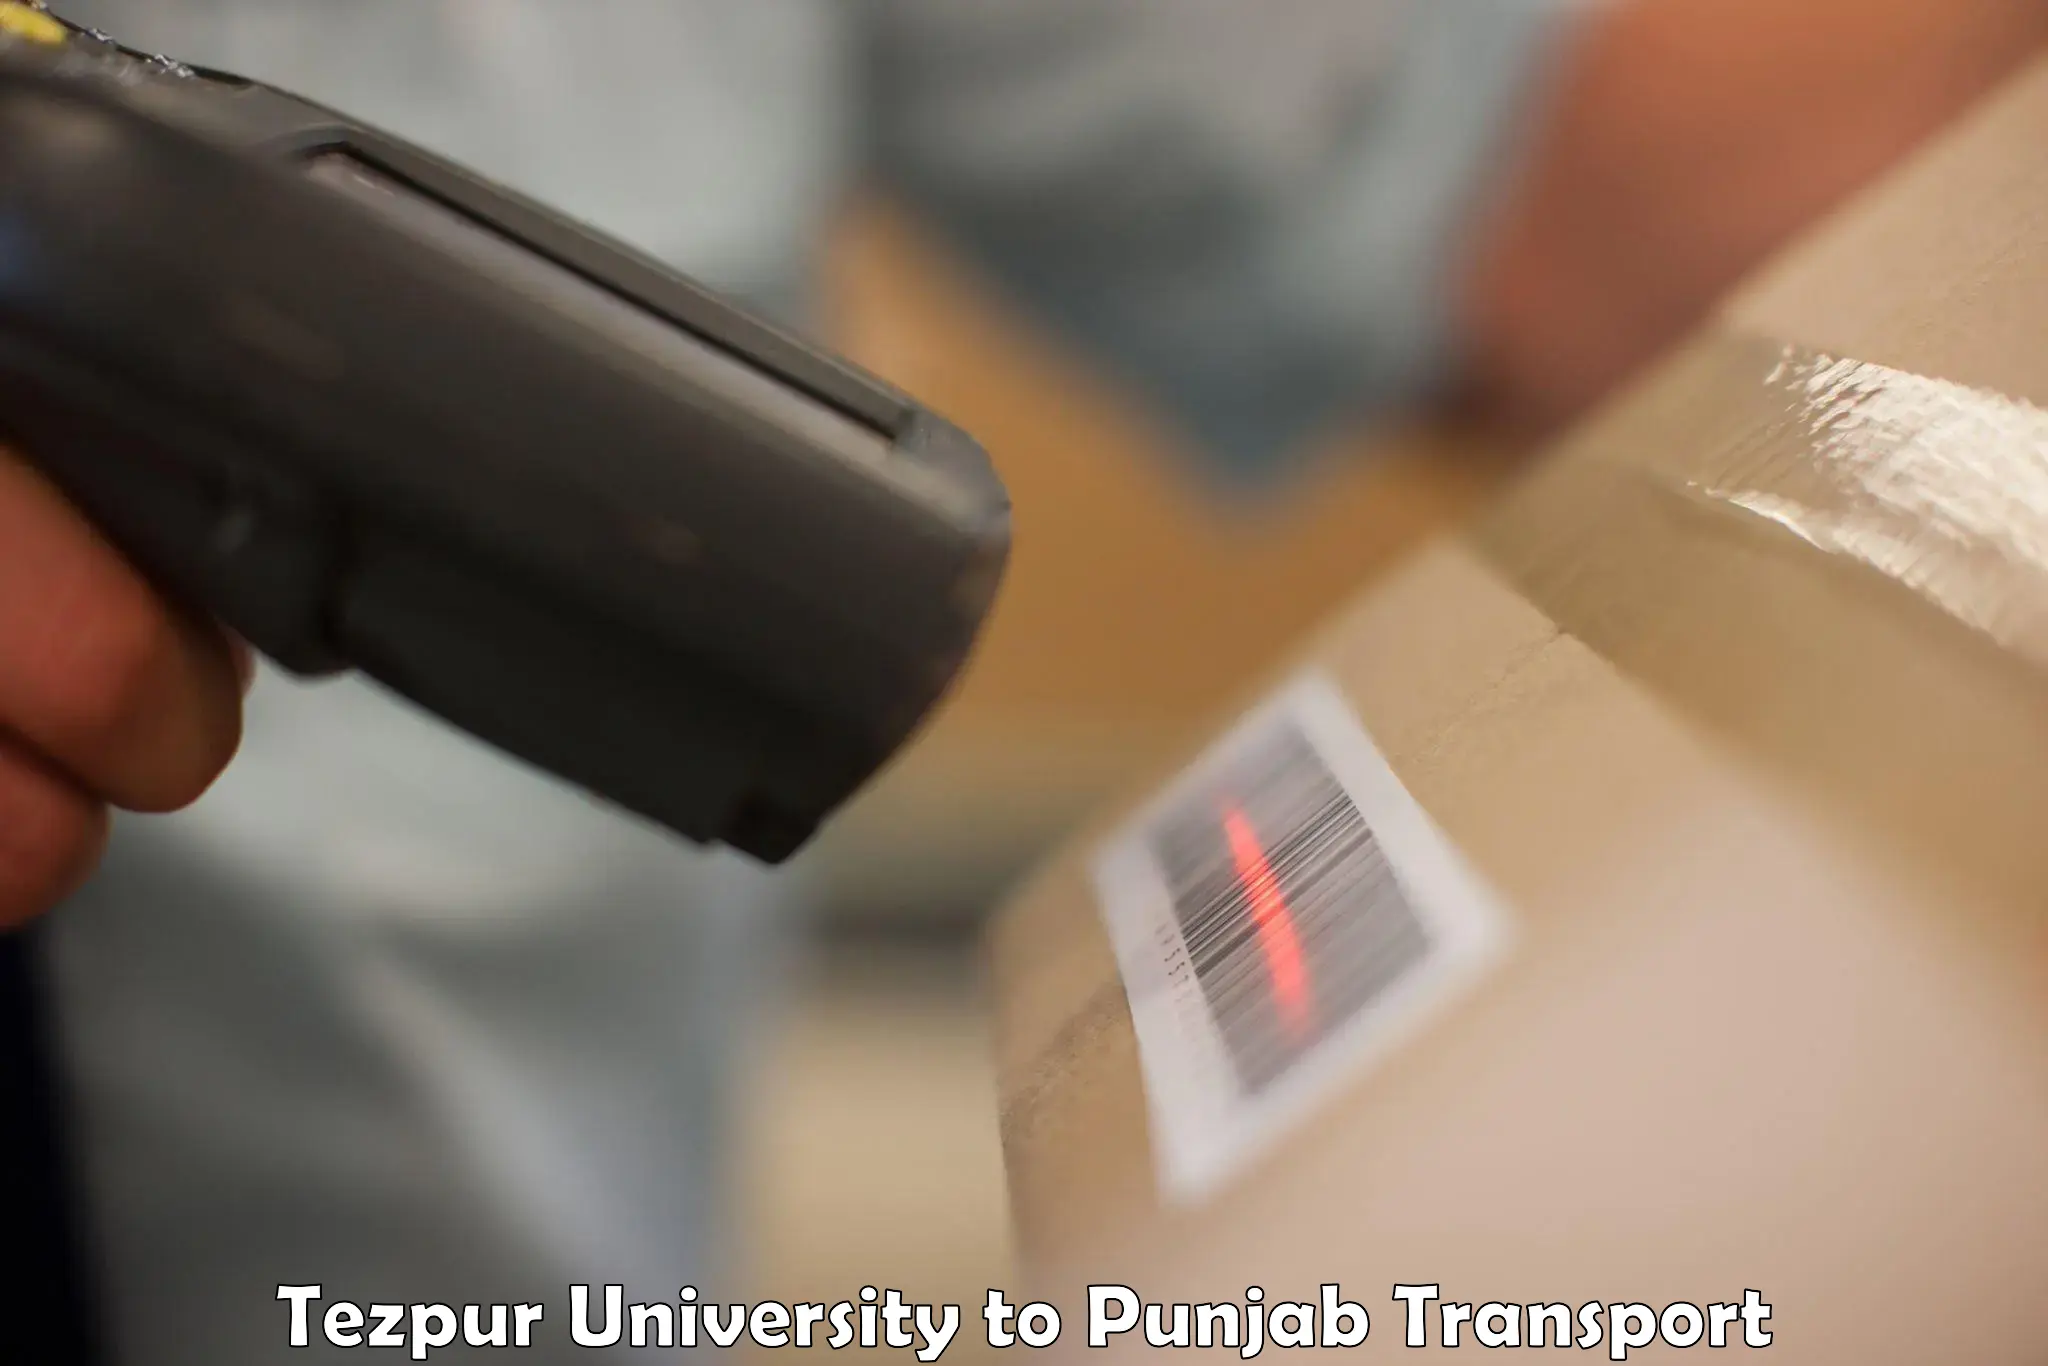 Pick up transport service Tezpur University to Amritsar